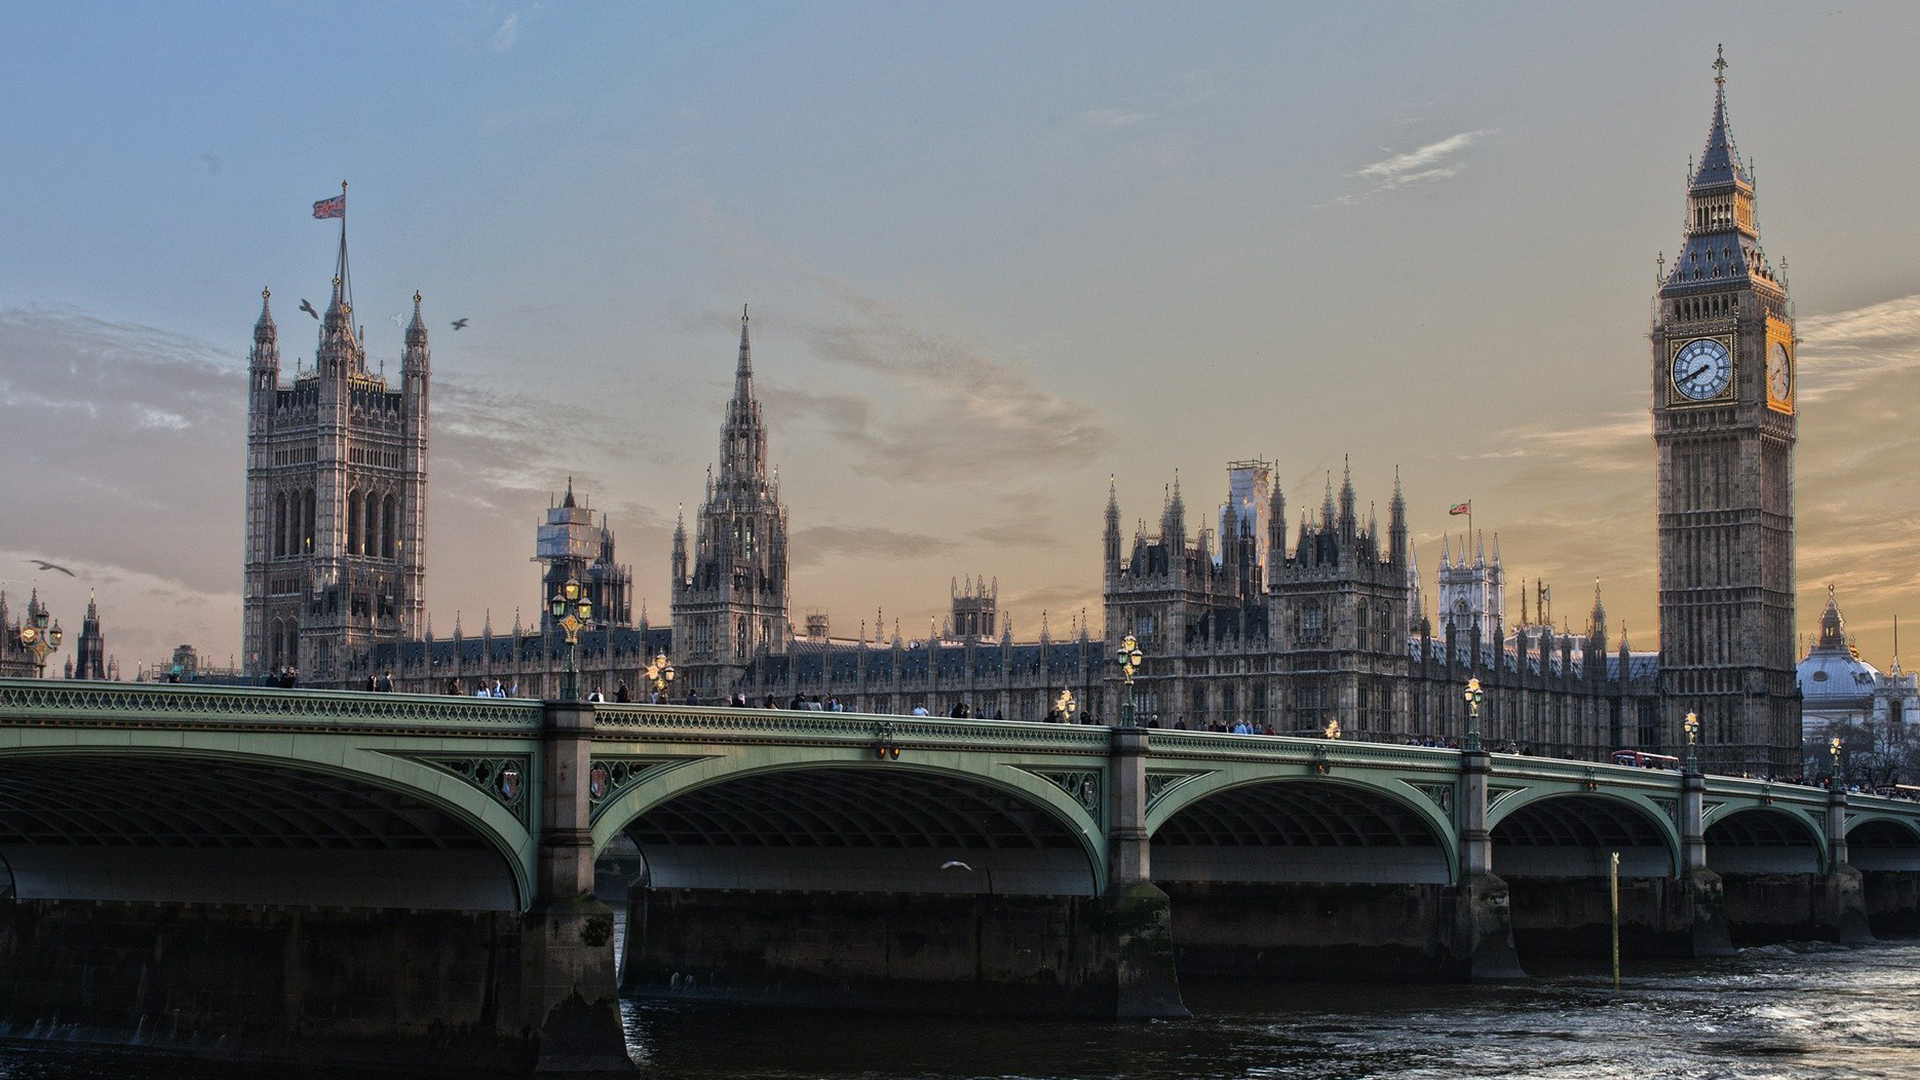 Auswandern nach England - London - Big Ben - Palace of Westminster